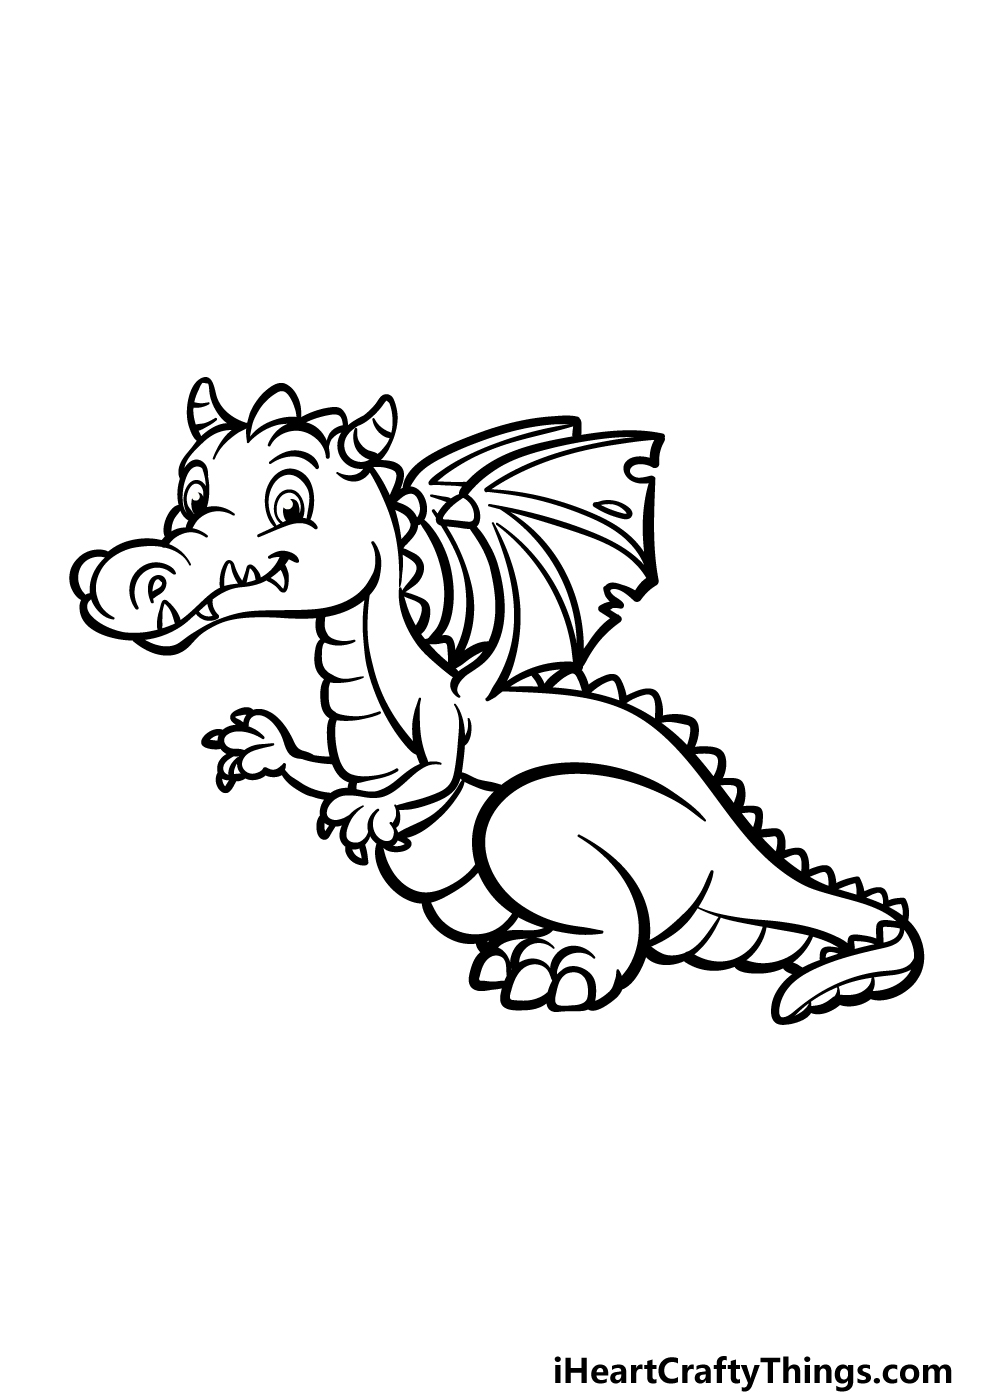 how to draw a cartoon dragon step 4